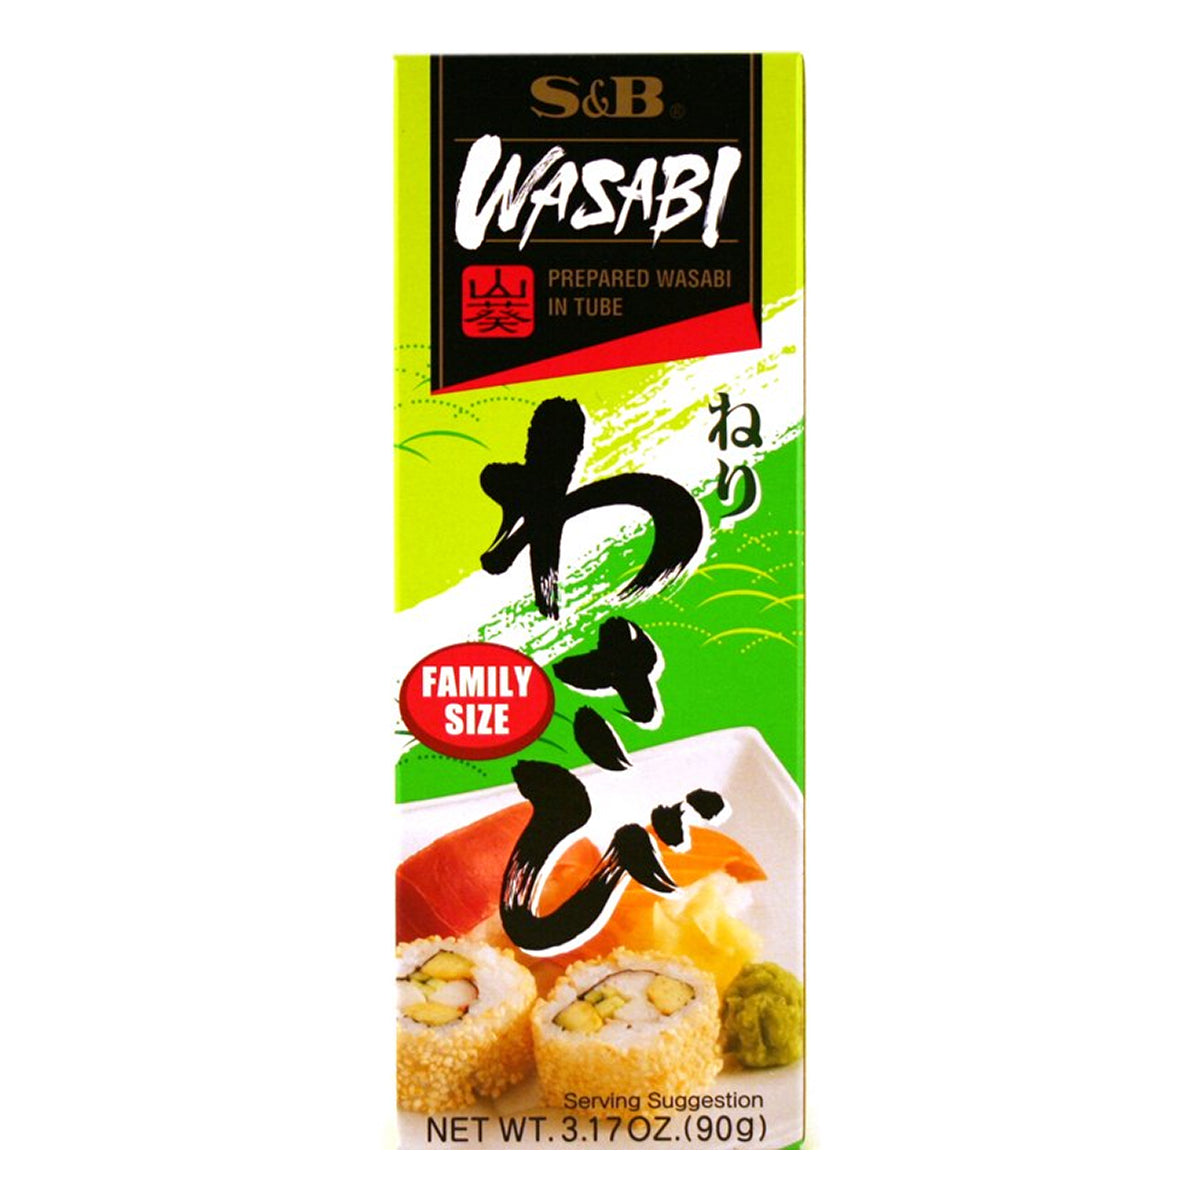 s&b wasabi family size - 3.17oz